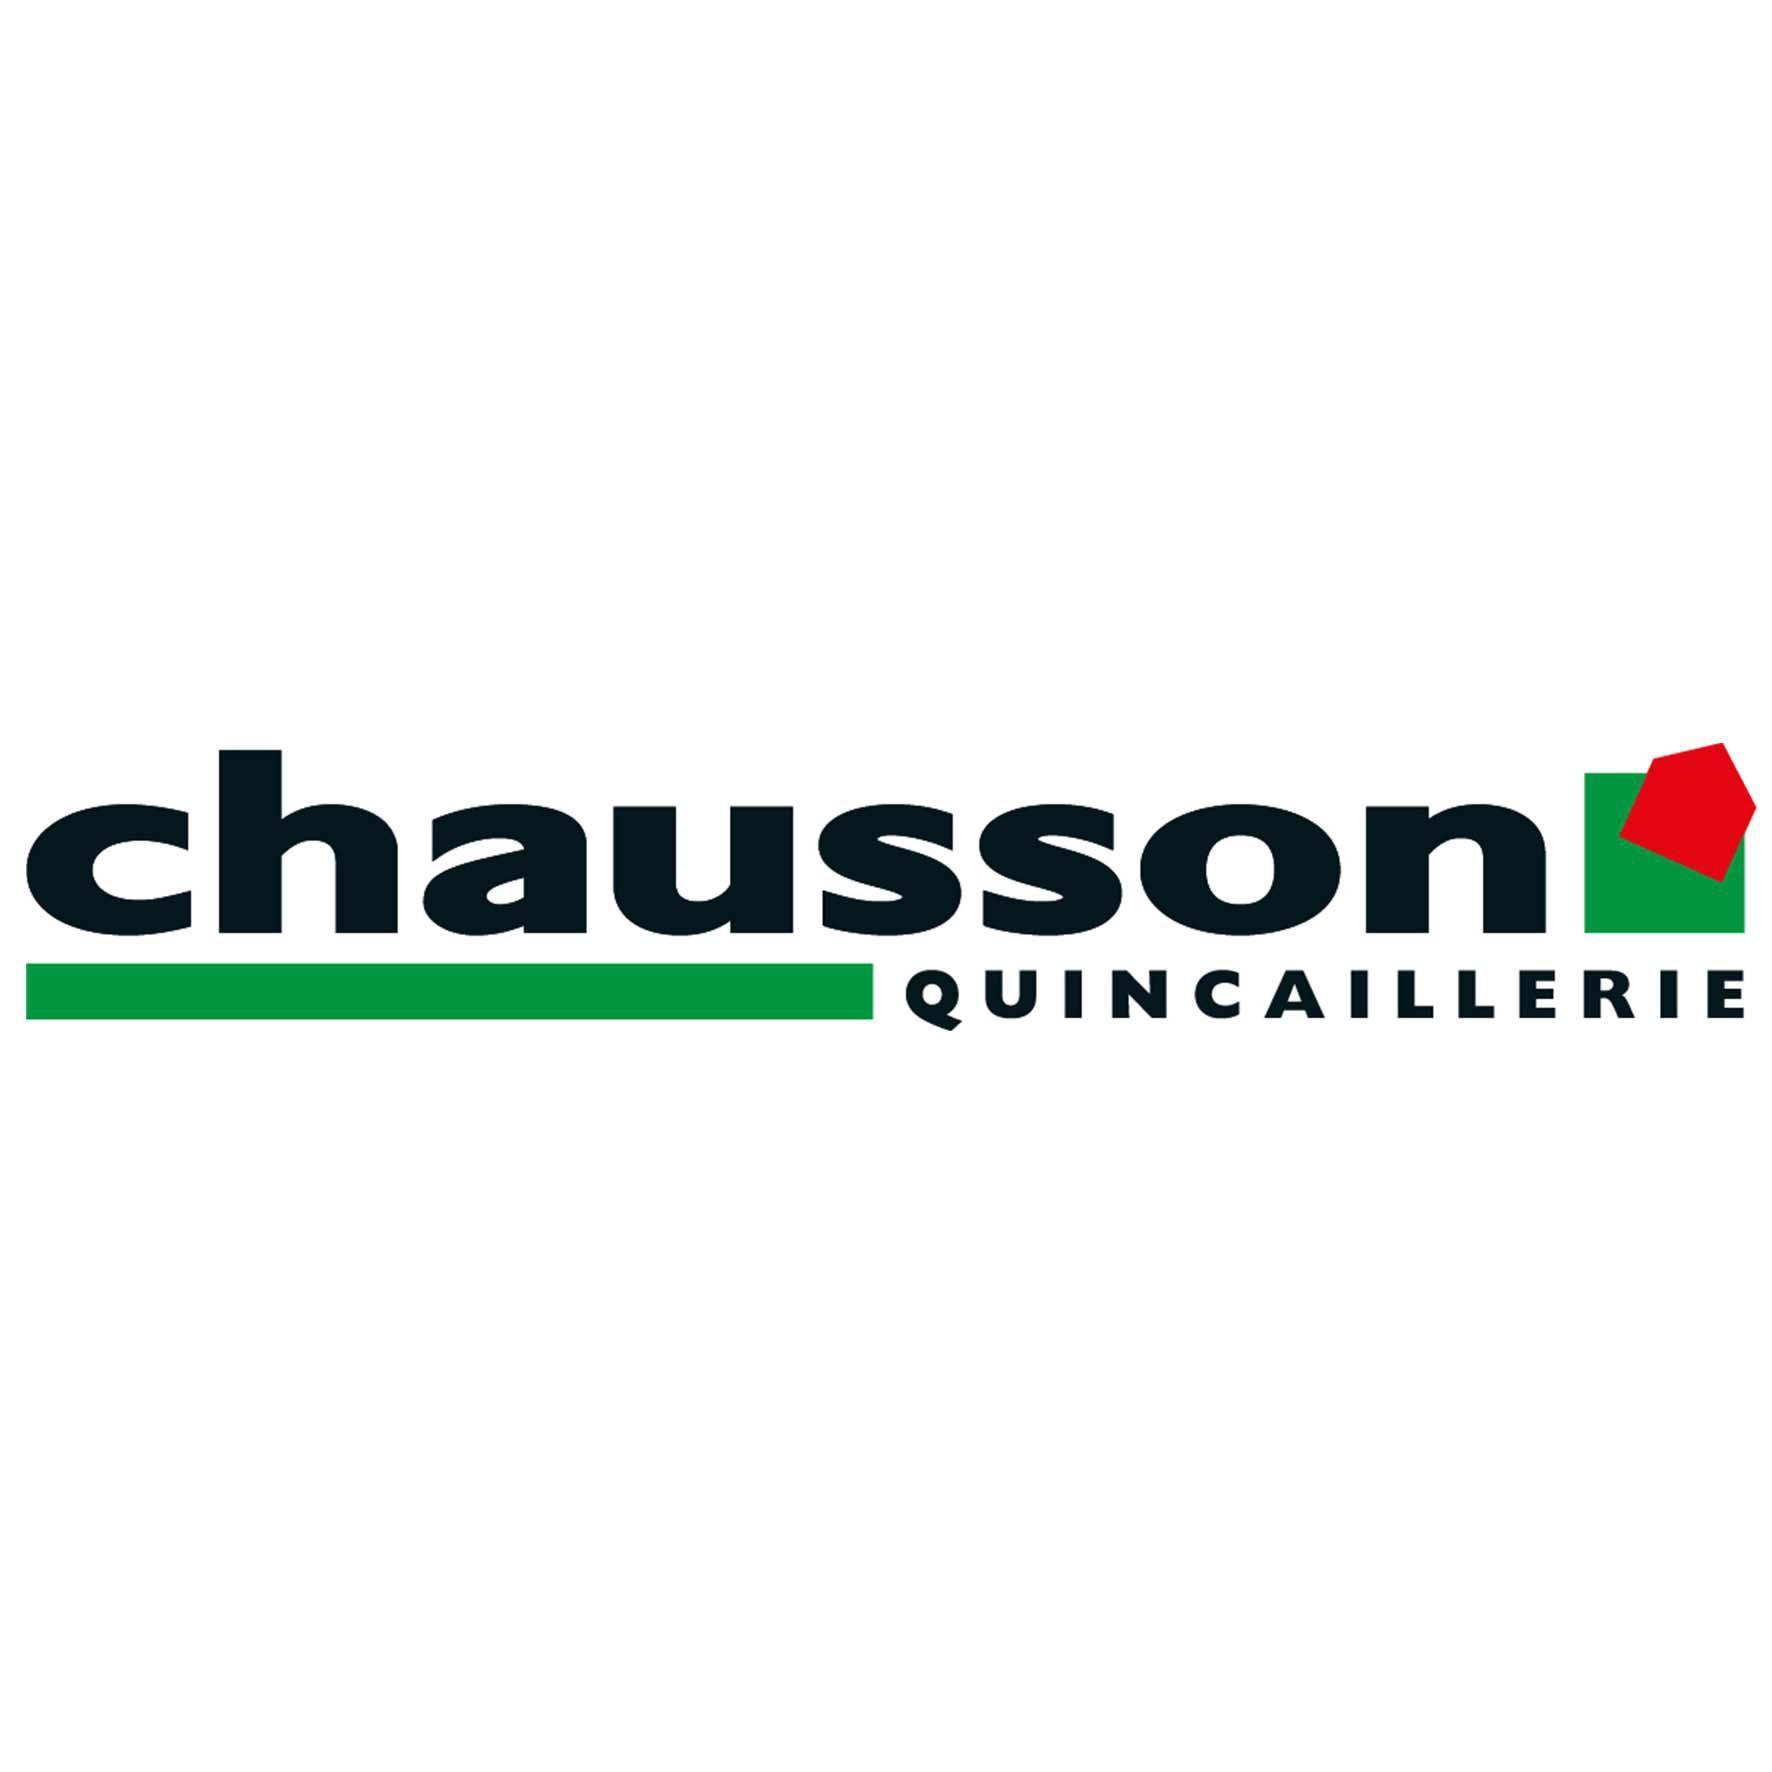 Chausson Quincaillerie Bergerac